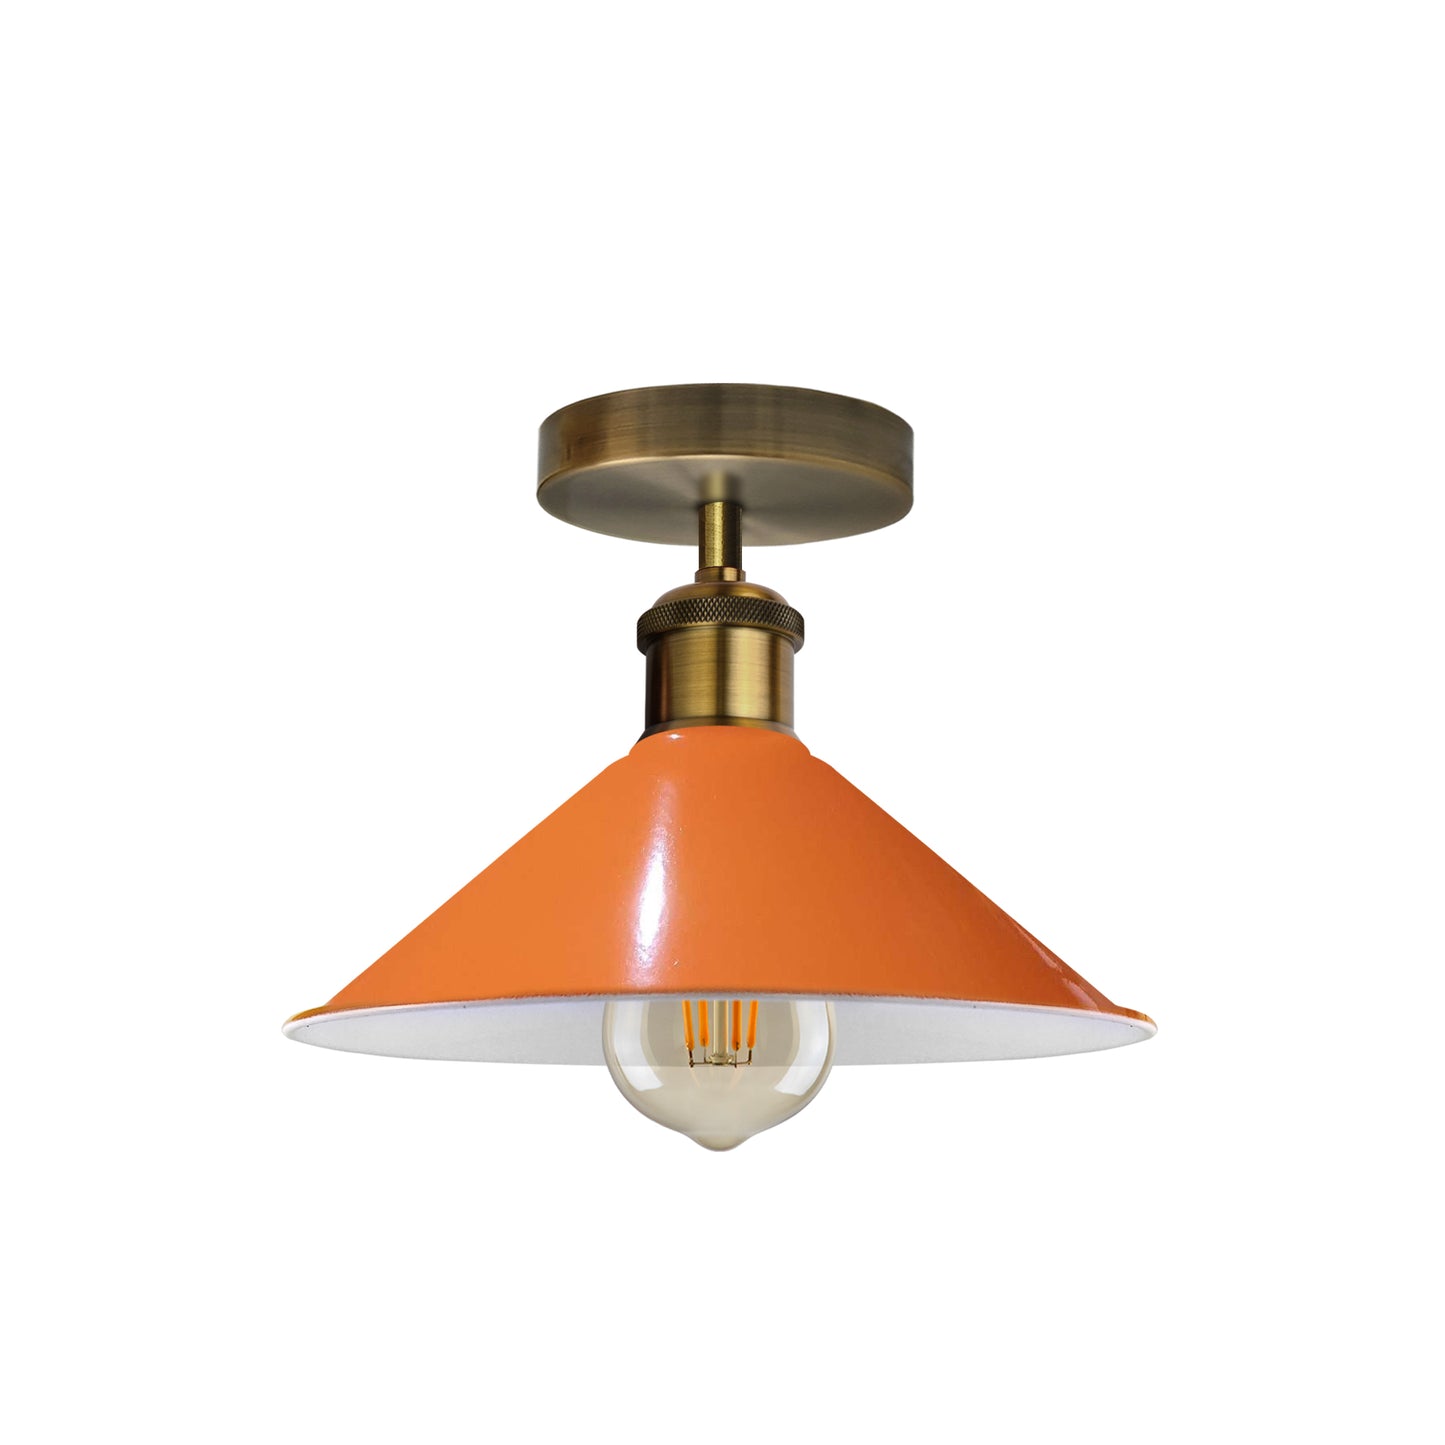 Vintage Industrial Ceiling Light Shades E27 Flush Mount Light